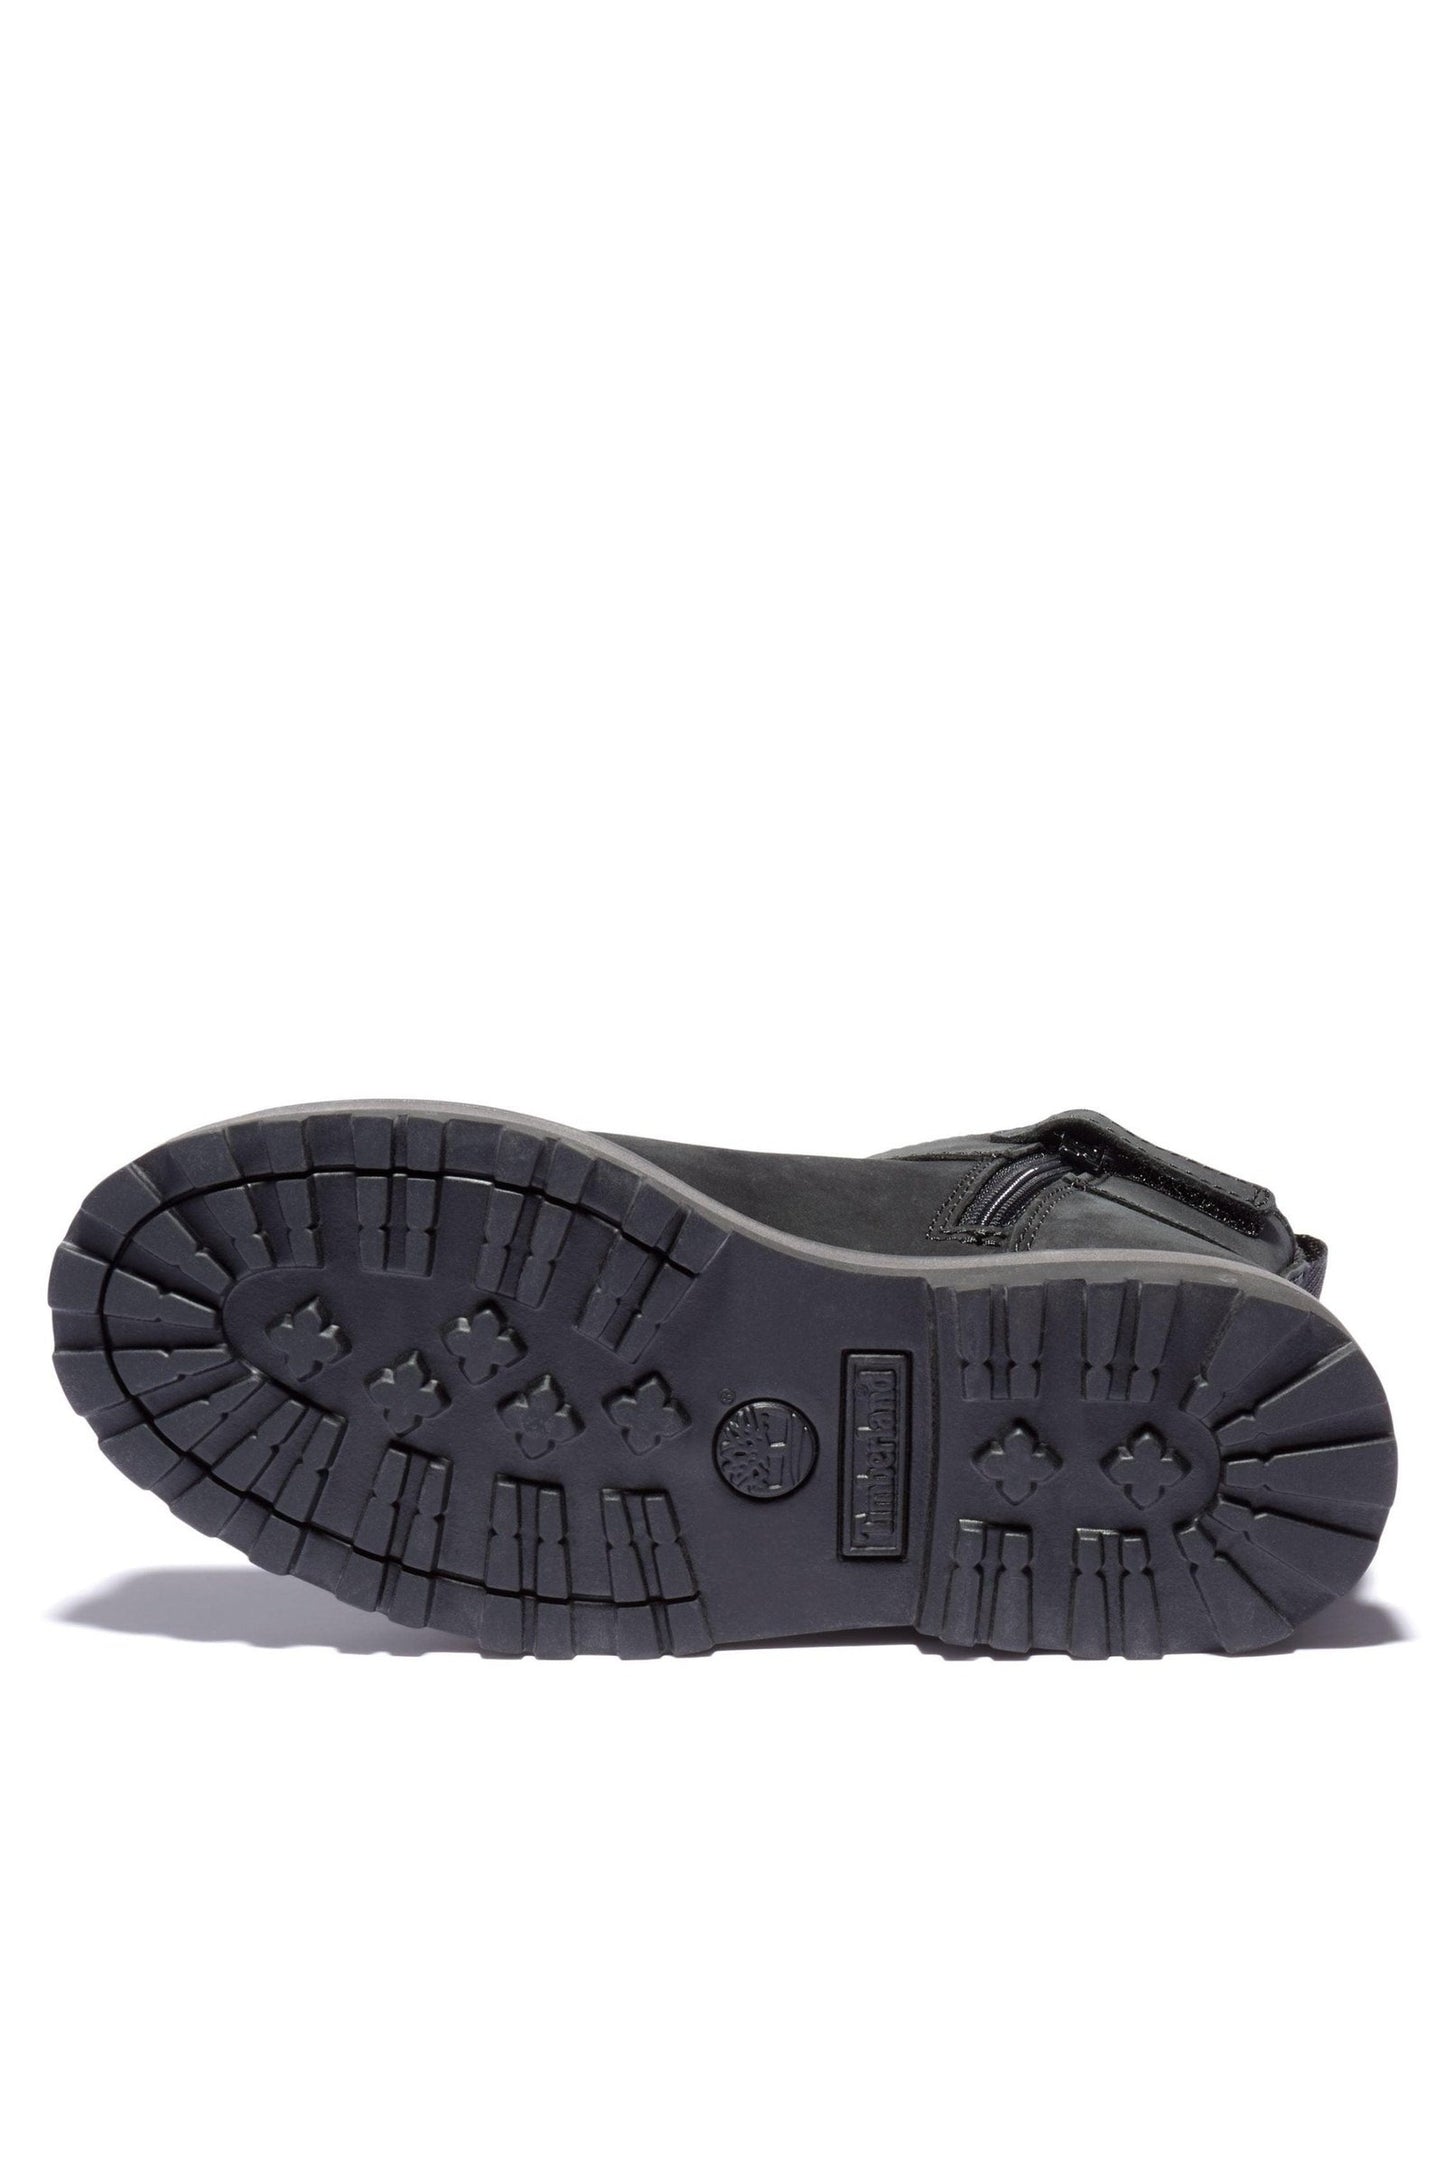 TIMBERLAND - מגפיים לנוער CONCORD SQUARE CHELS בצבע שחור - MASHBIR//365